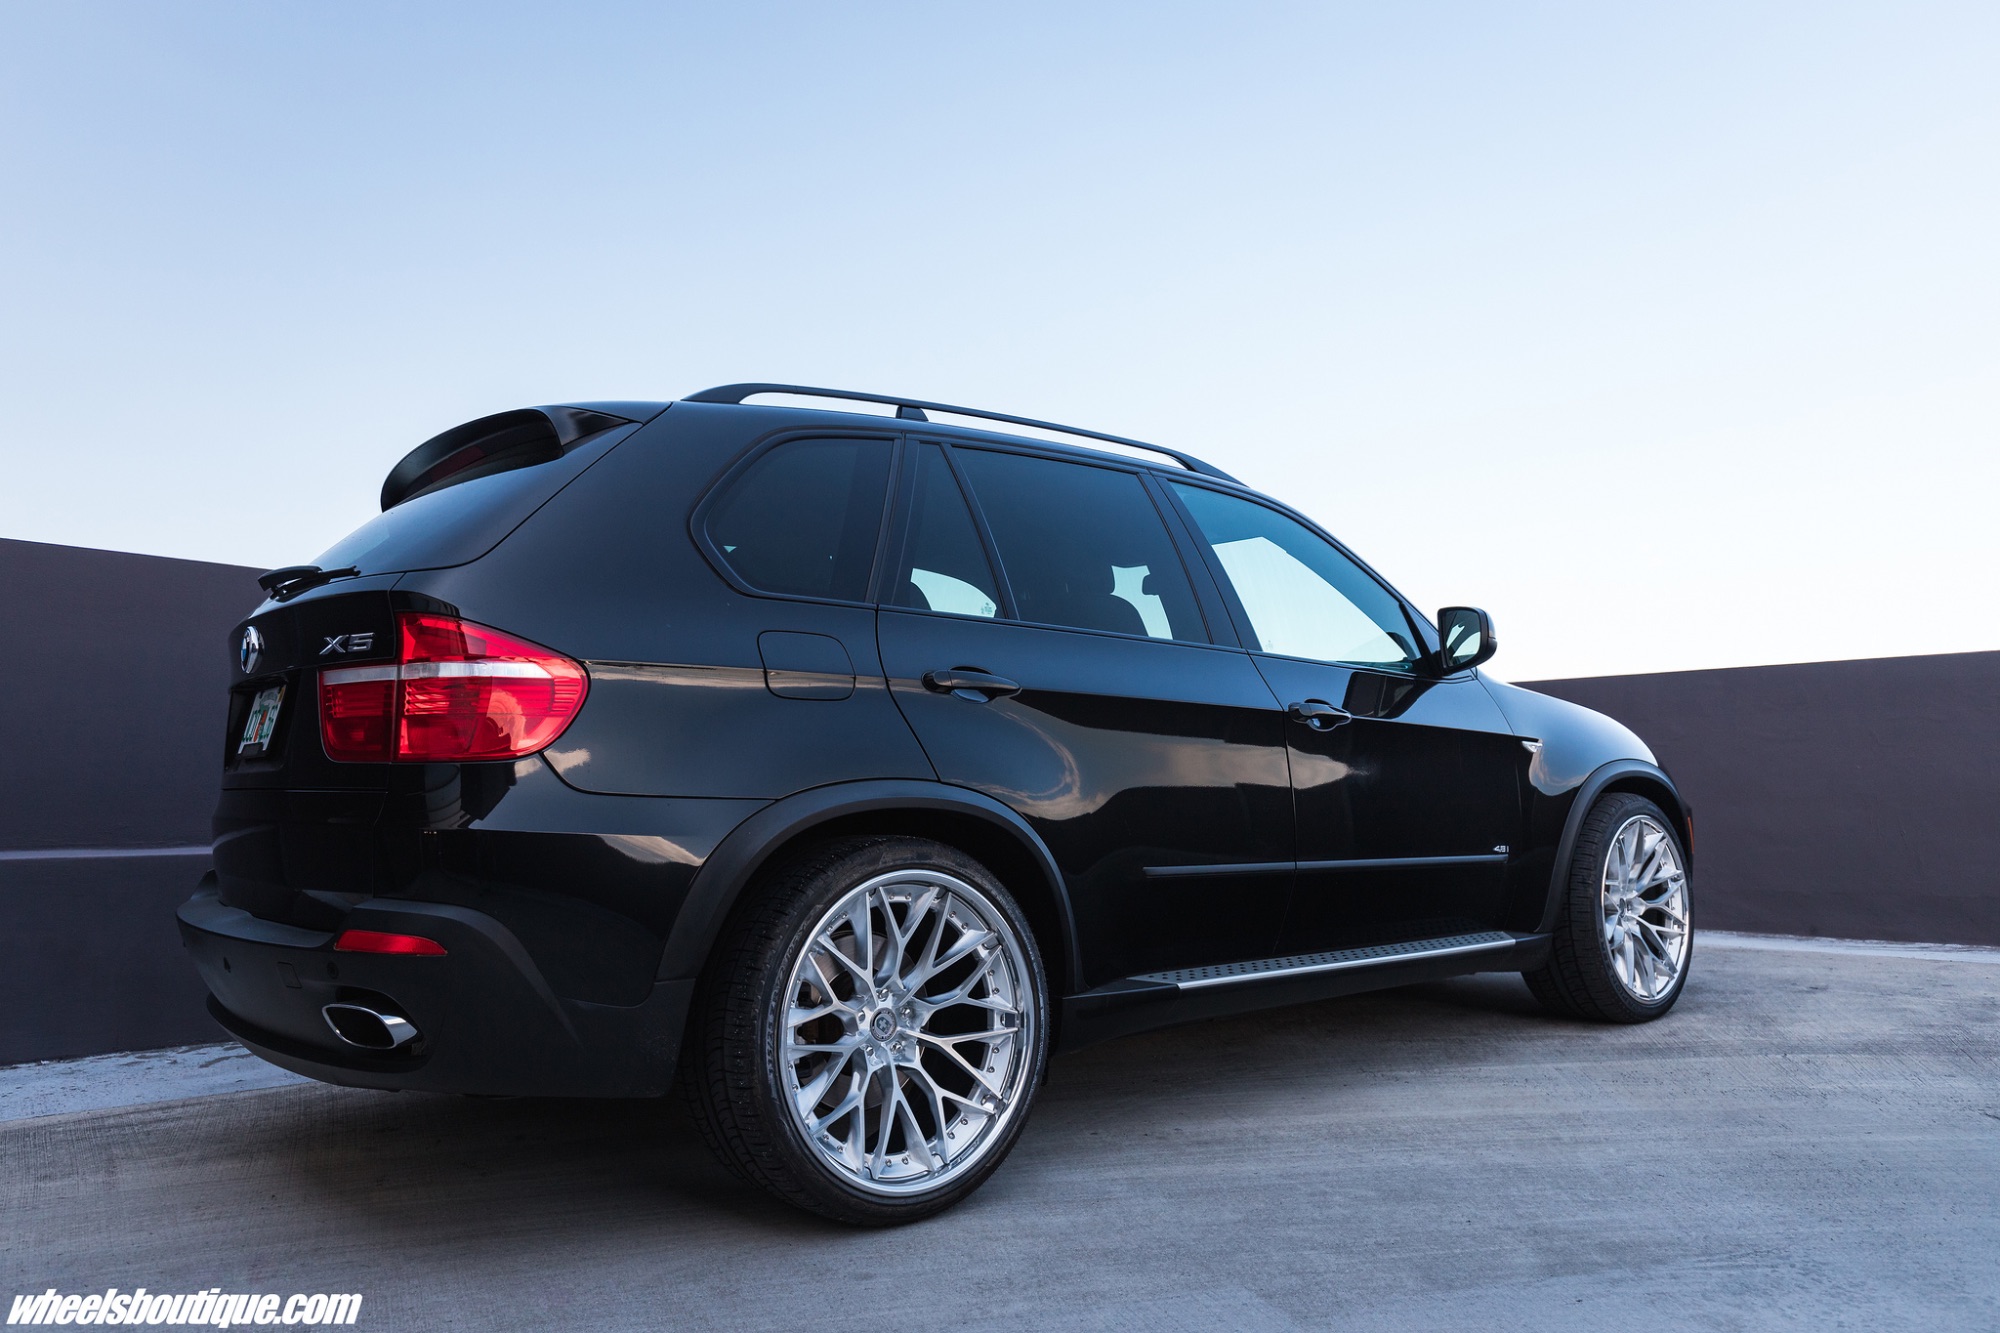 BMW X5 E70 Black HRE S200 Wheel Front